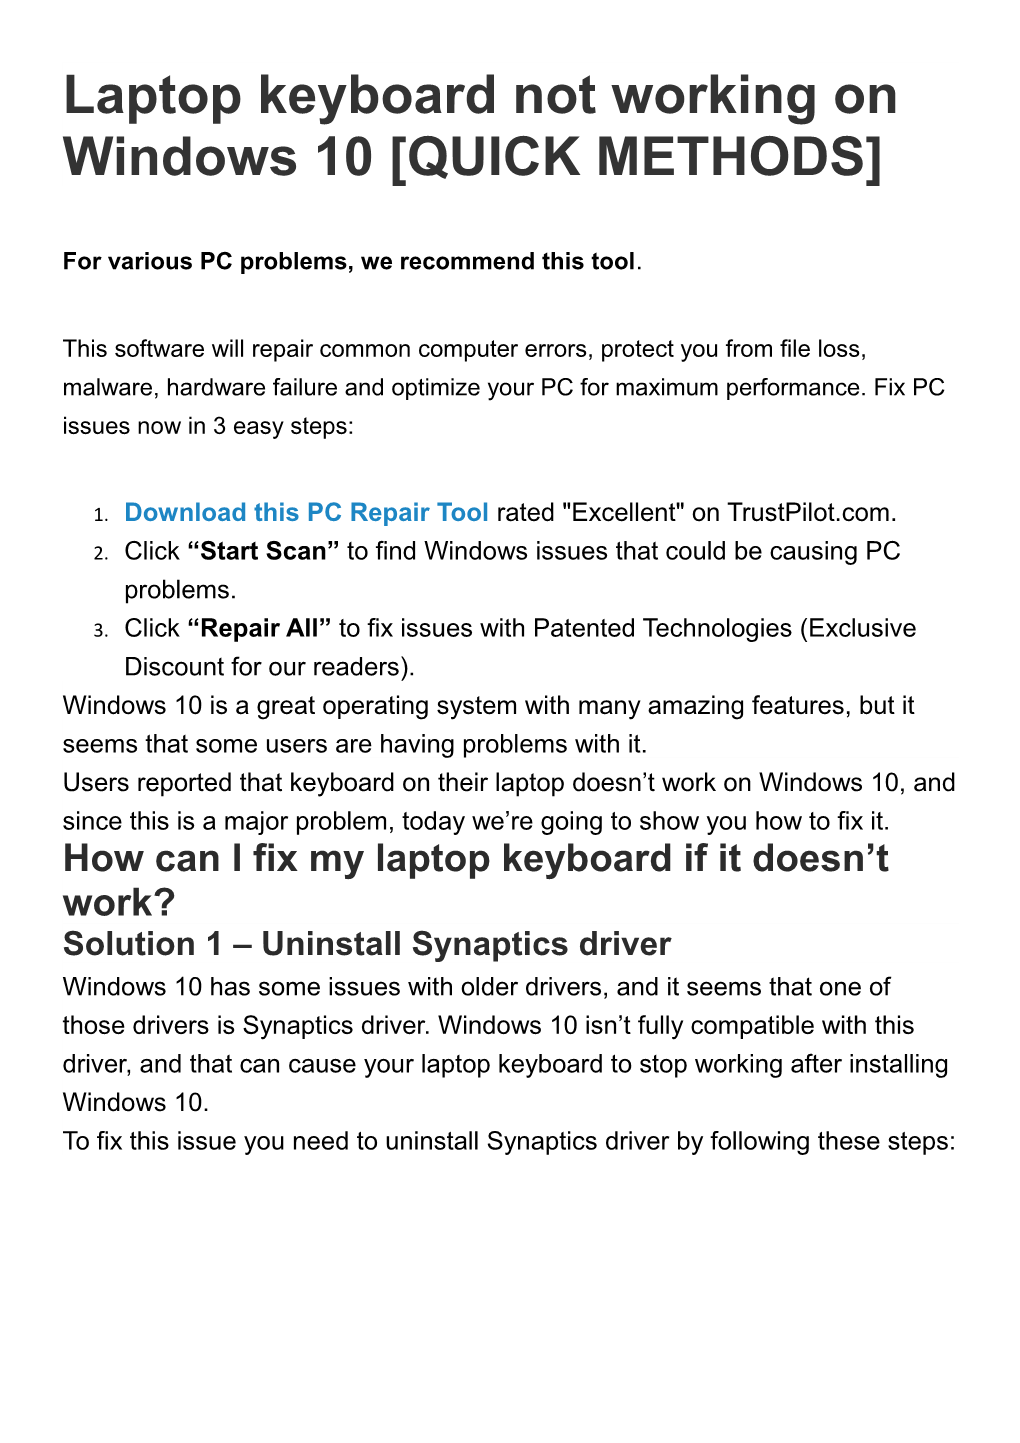 Laptop Keyboard Not Working on Windows 10